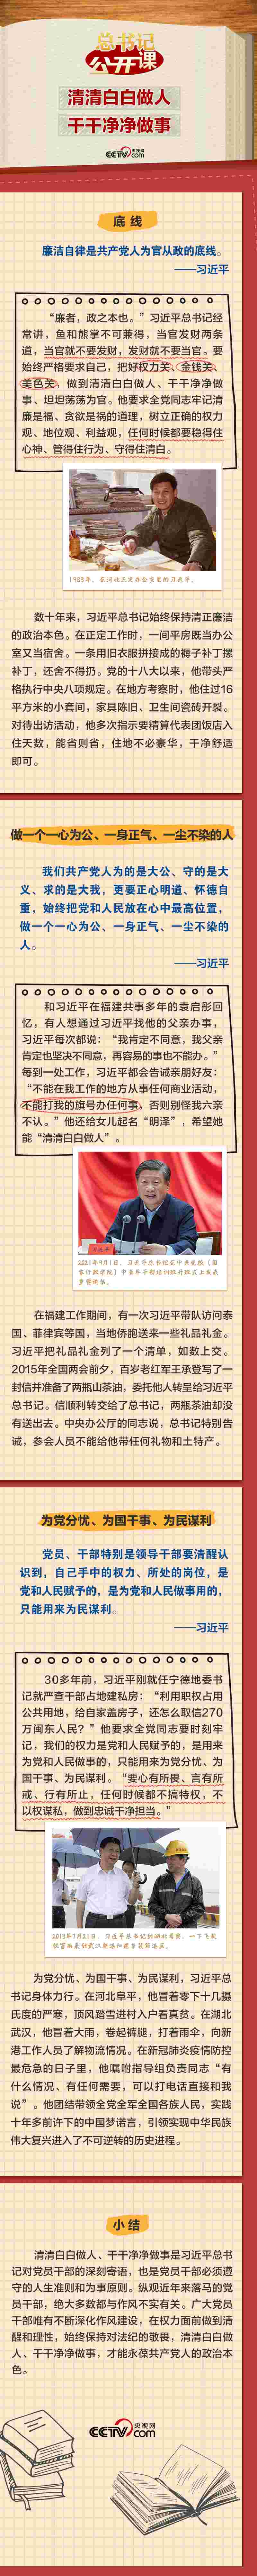 General Secretary "Open Class" | Be Clean and Clean Xi Jinping | Times | General Secretary